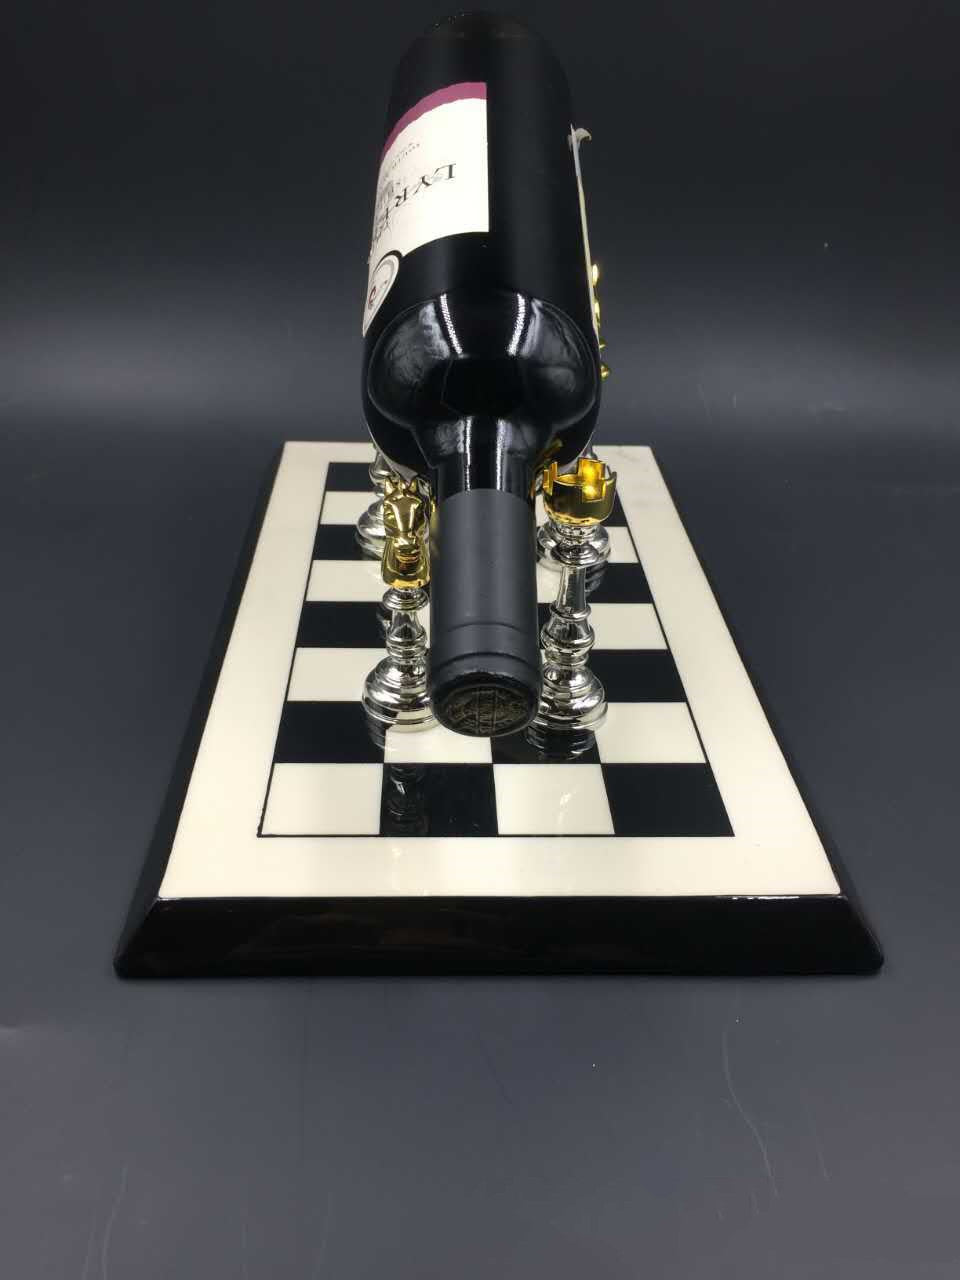 The Chessboard Wine Rack